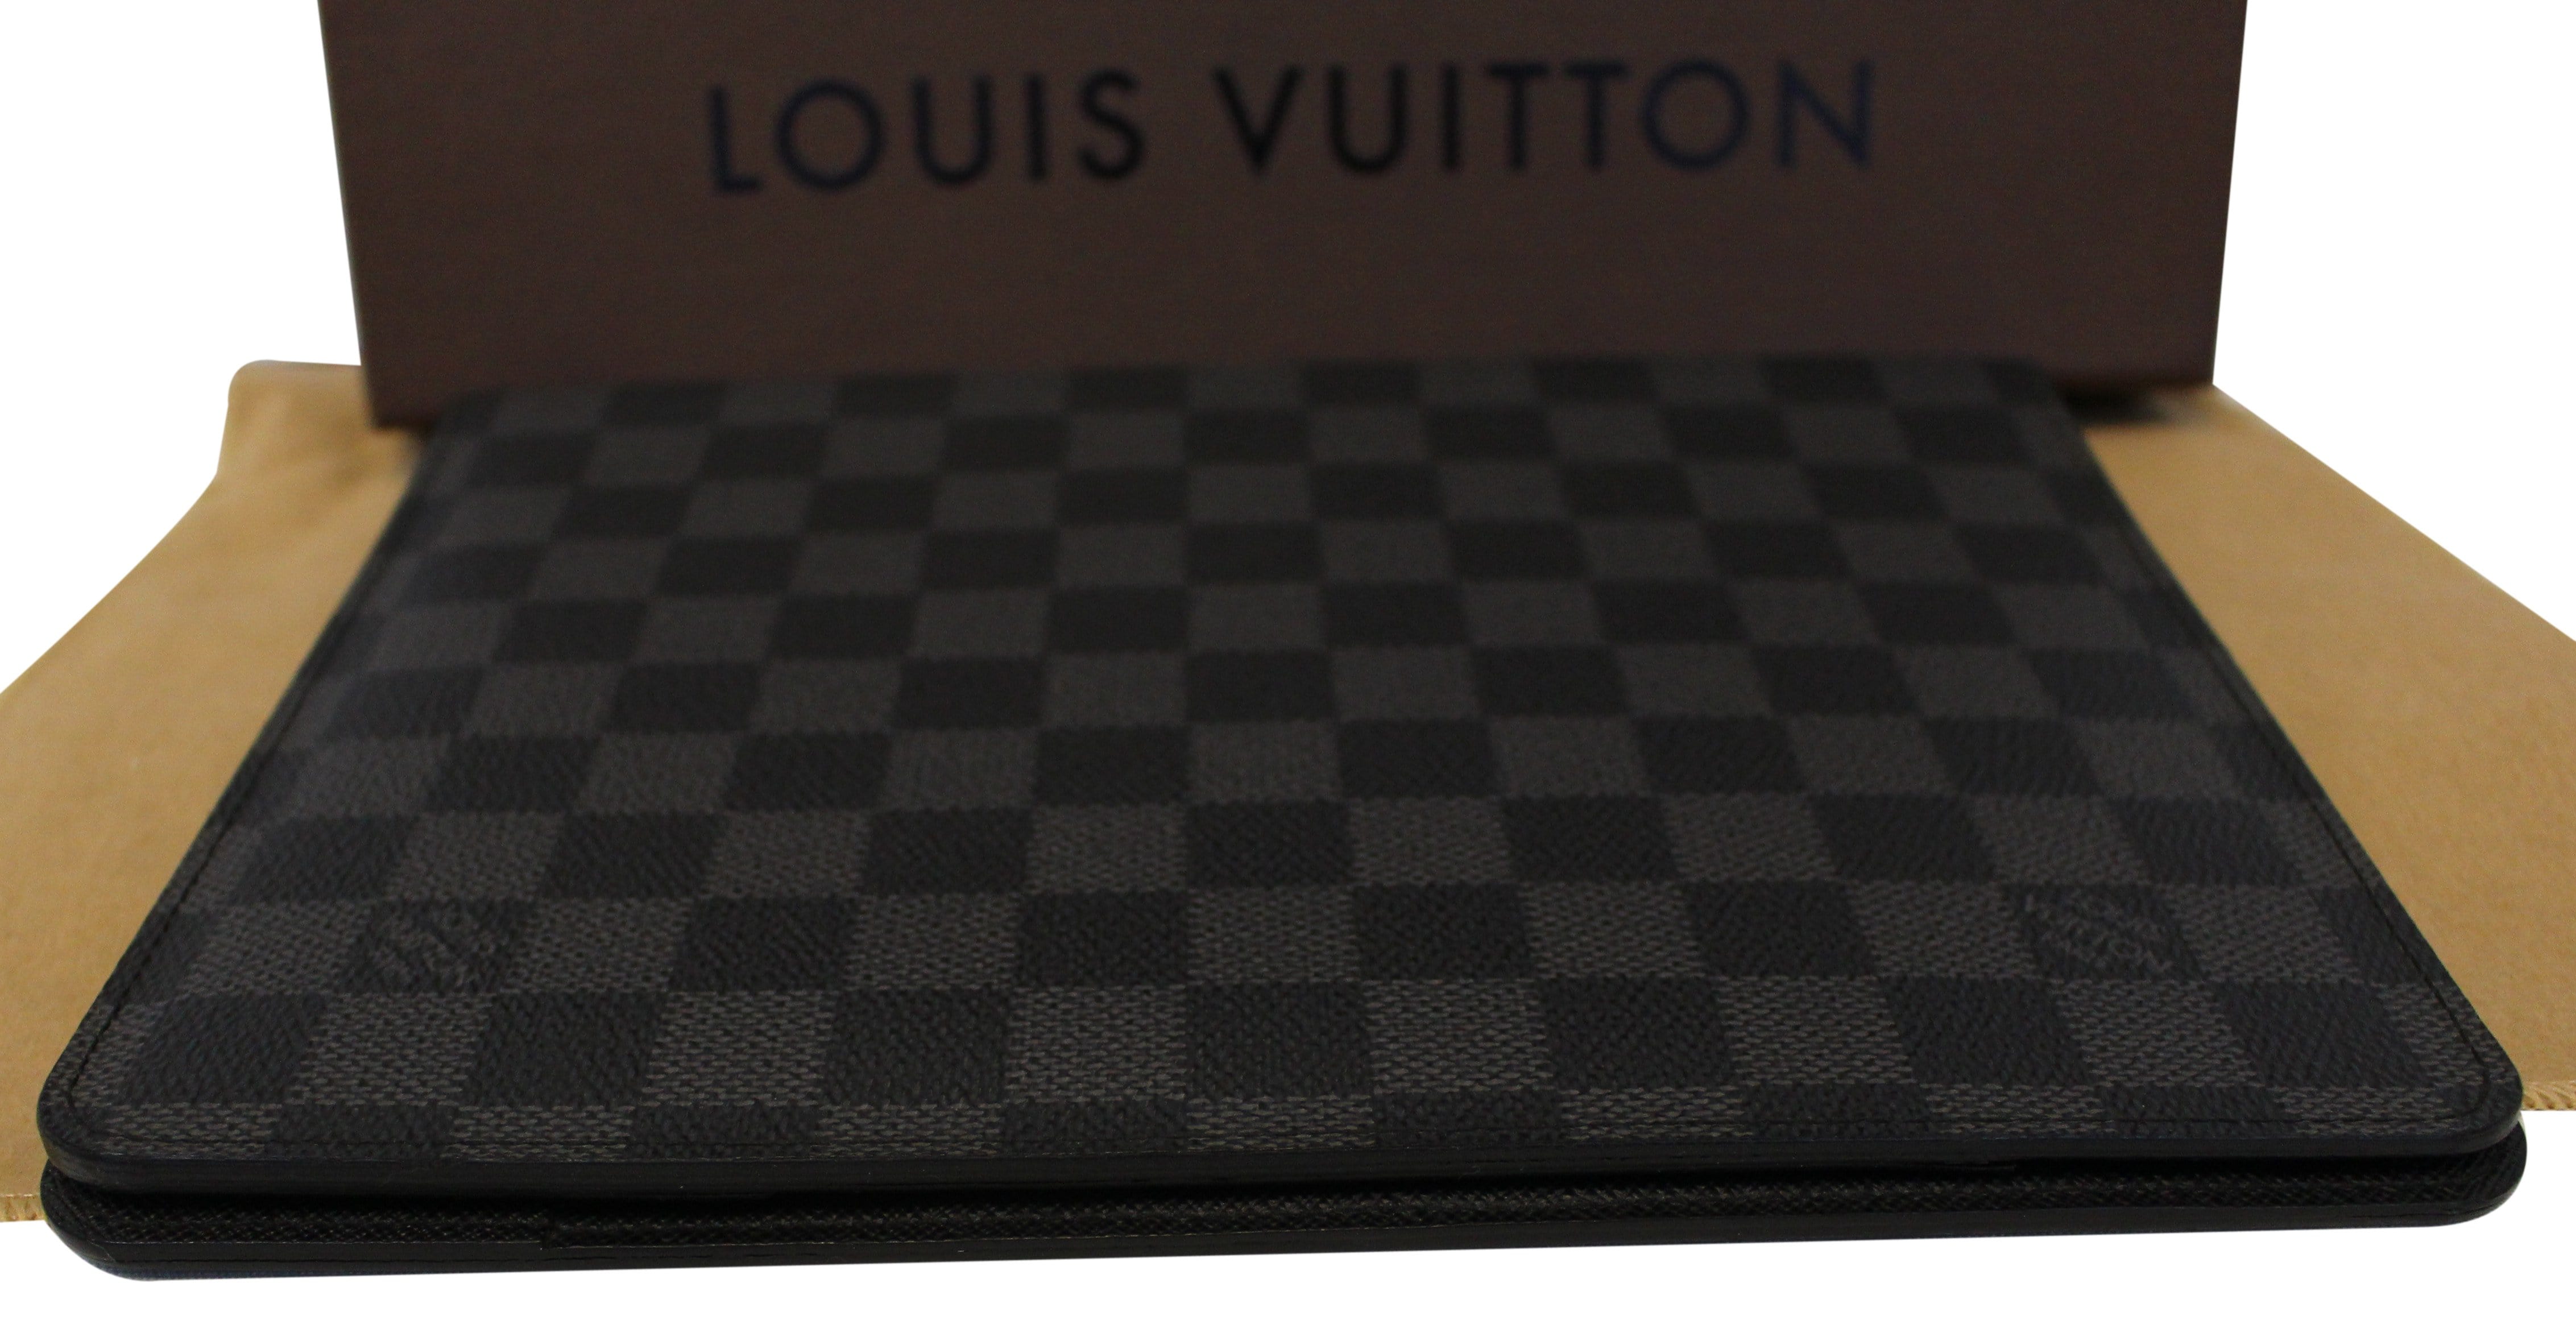 Reply to @kp_nola Louis Vuitton desk agenda cover in : Damier Graphite